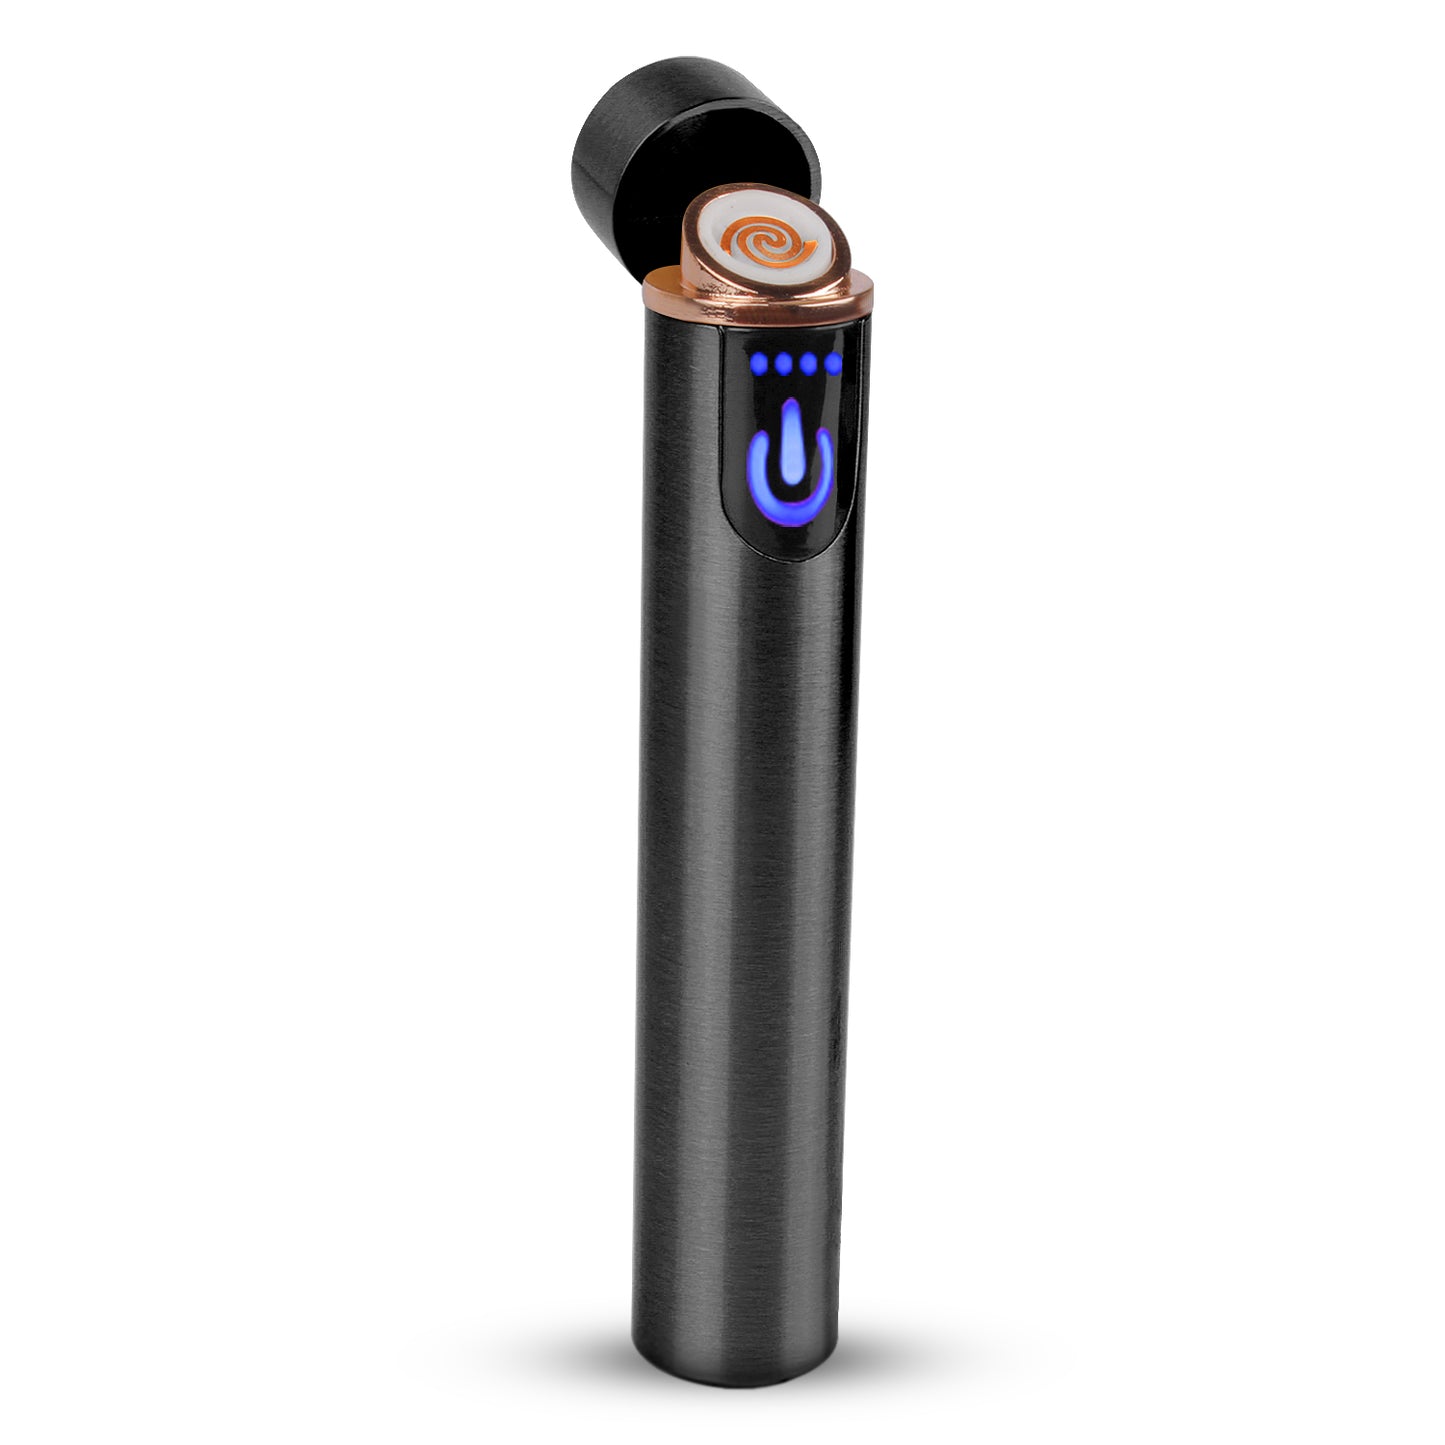 WRADER USB Rechargeable Flameless Cigarette Lighter with On/Off Touch Sensor Plasma Lighter Non Gas Refillable Lighter Windproof Lighter Sleek Cigarette Lighter  (Black)